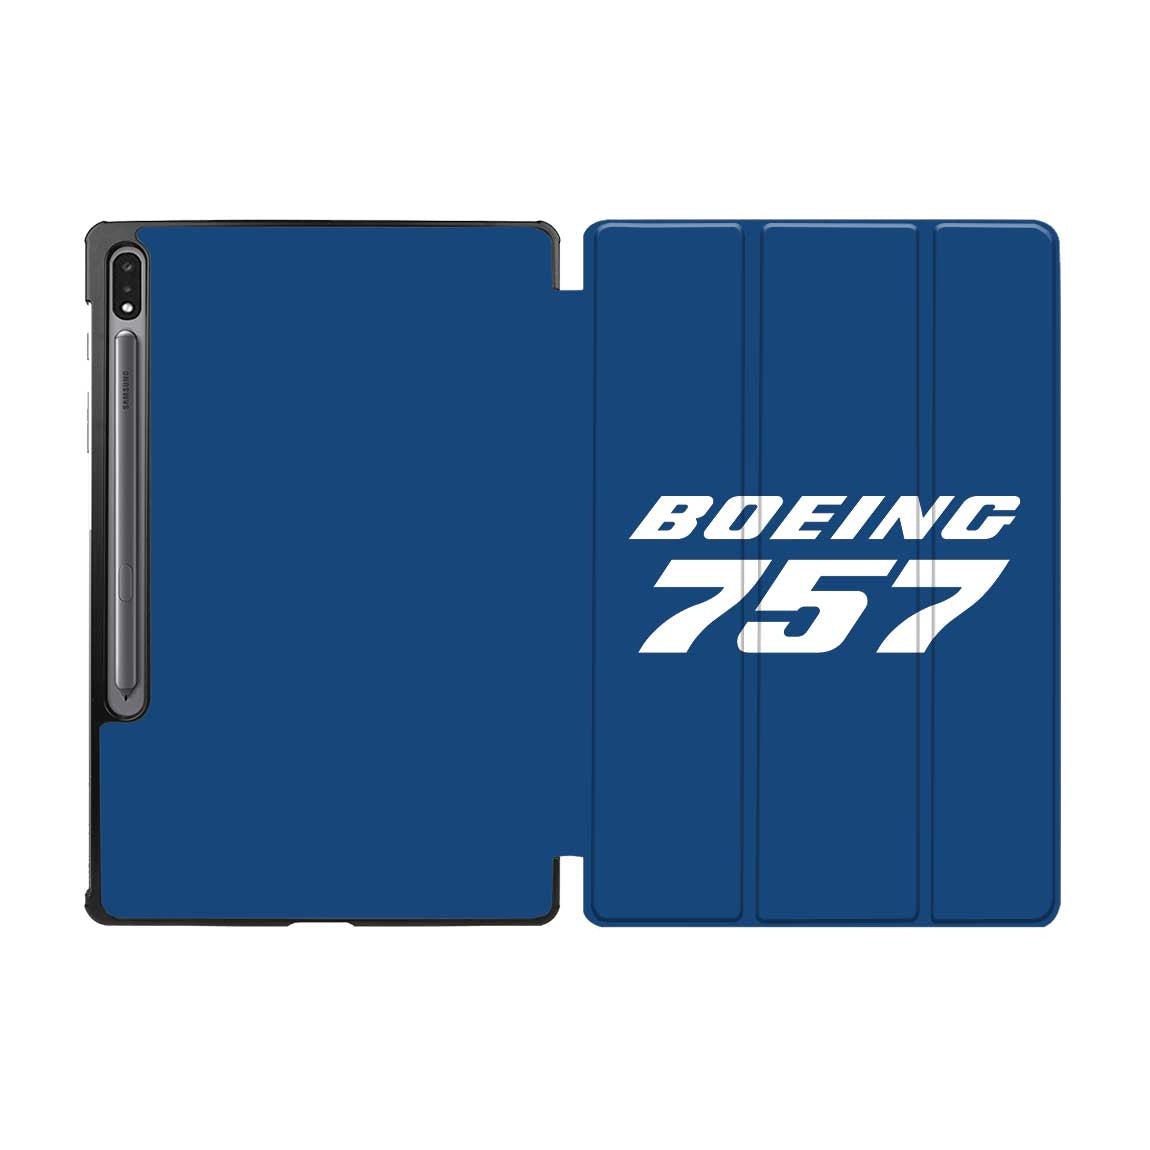 Boeing 757 & Text Designed Samsung Tablet Cases